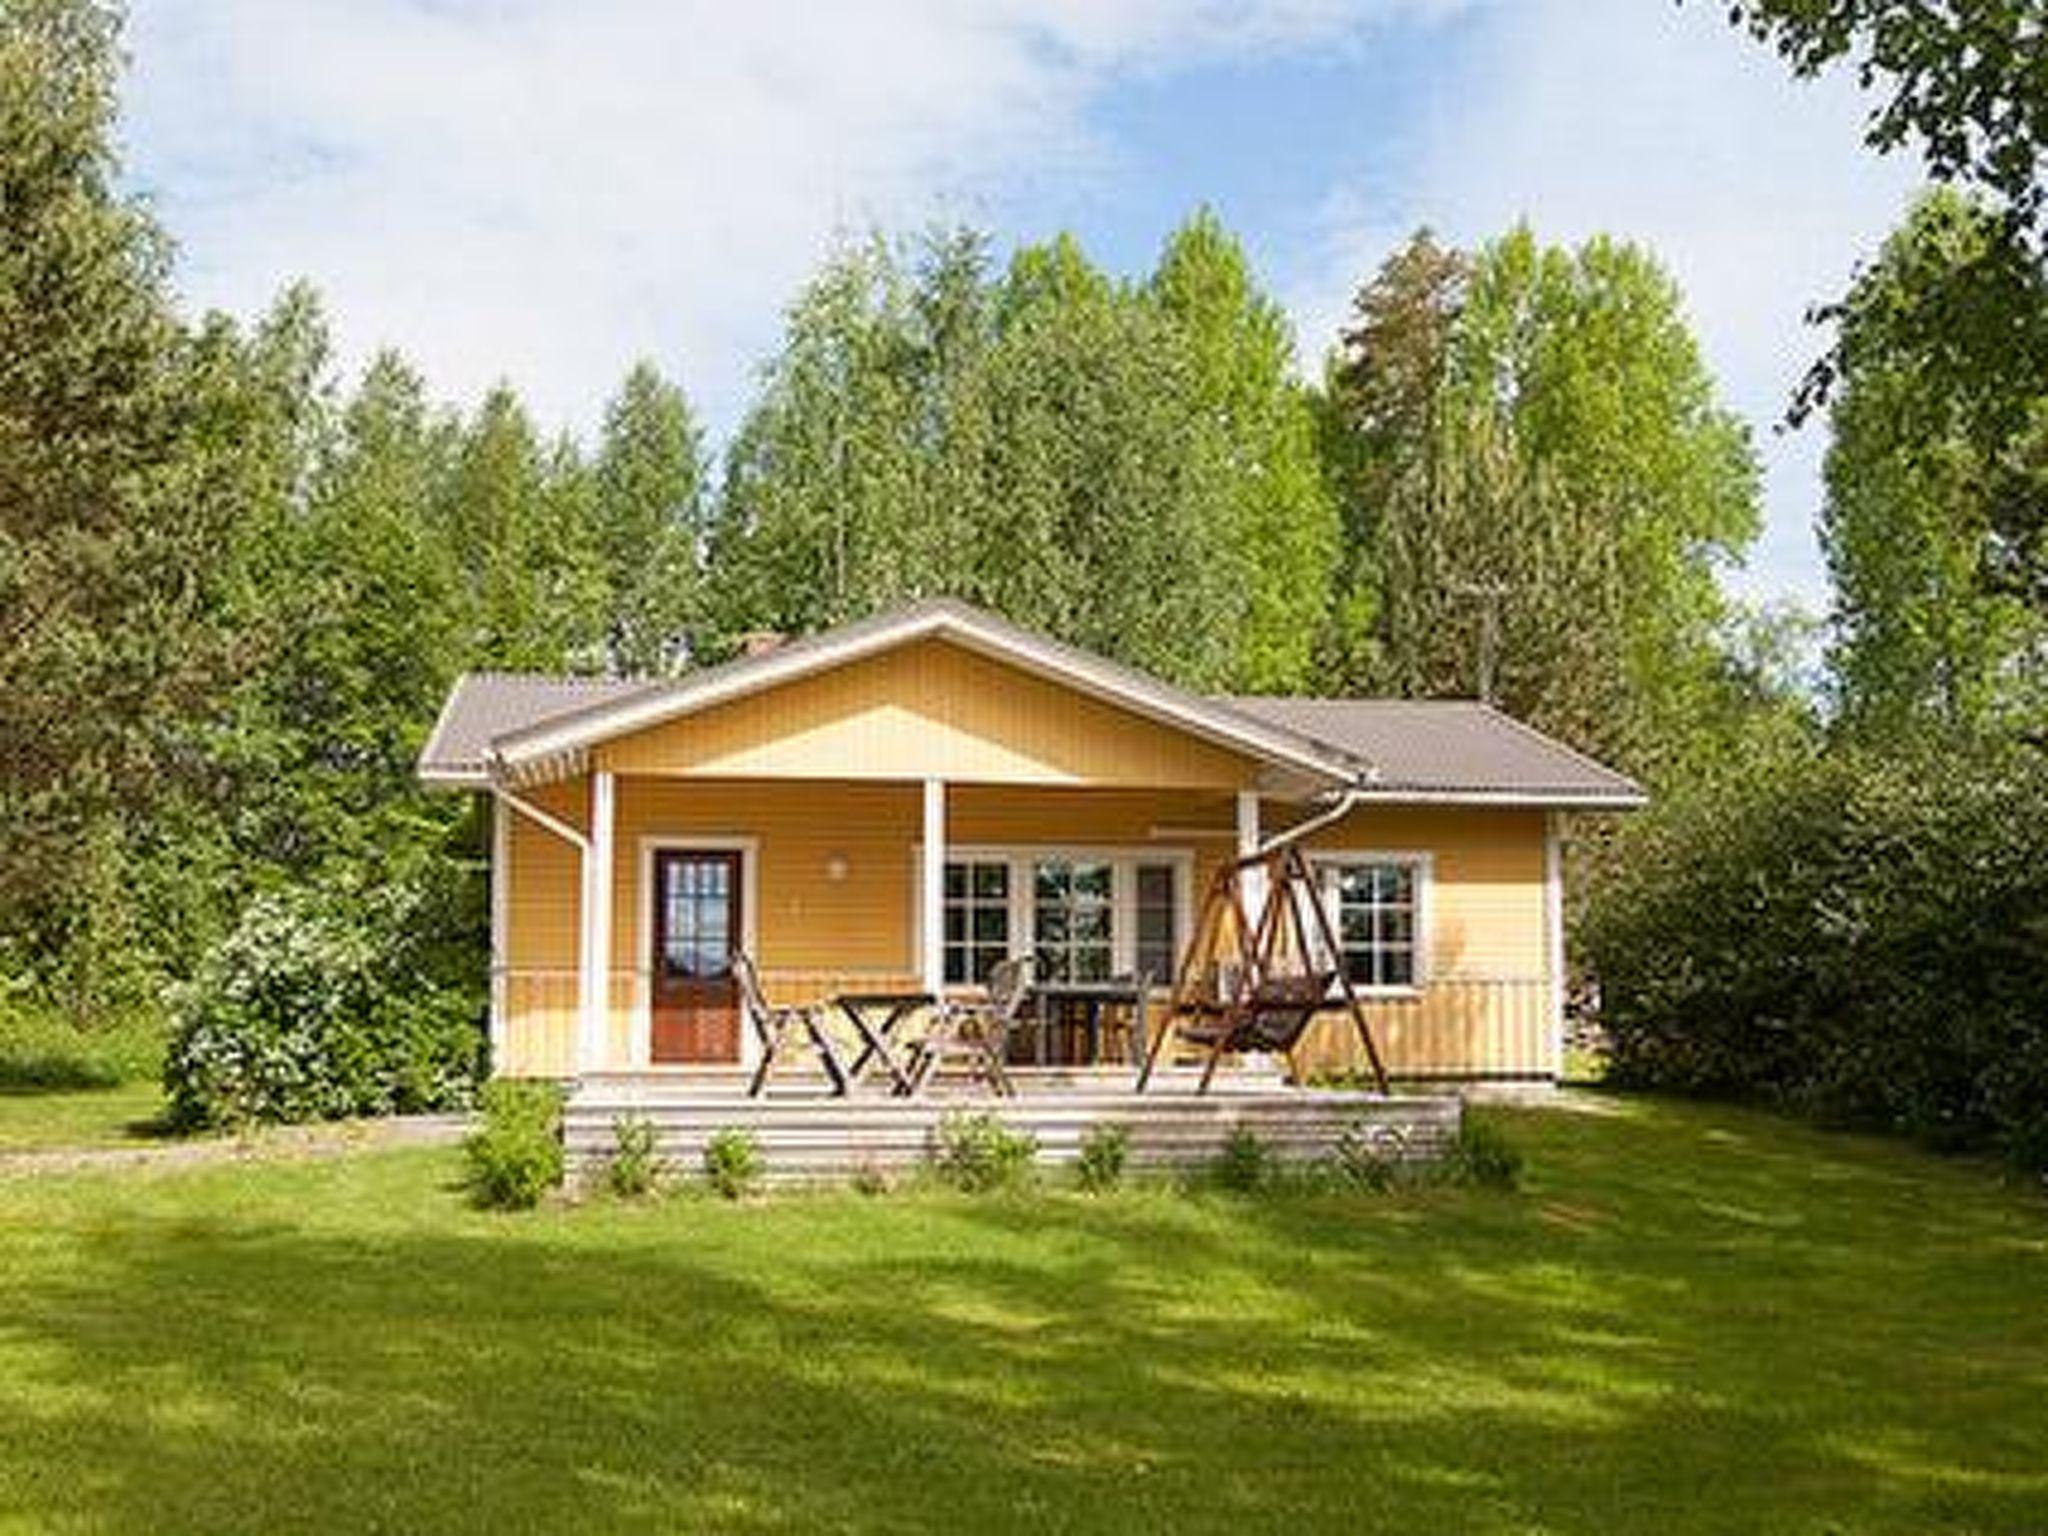 Photo 1 - 2 bedroom House in Ikaalinen with sauna